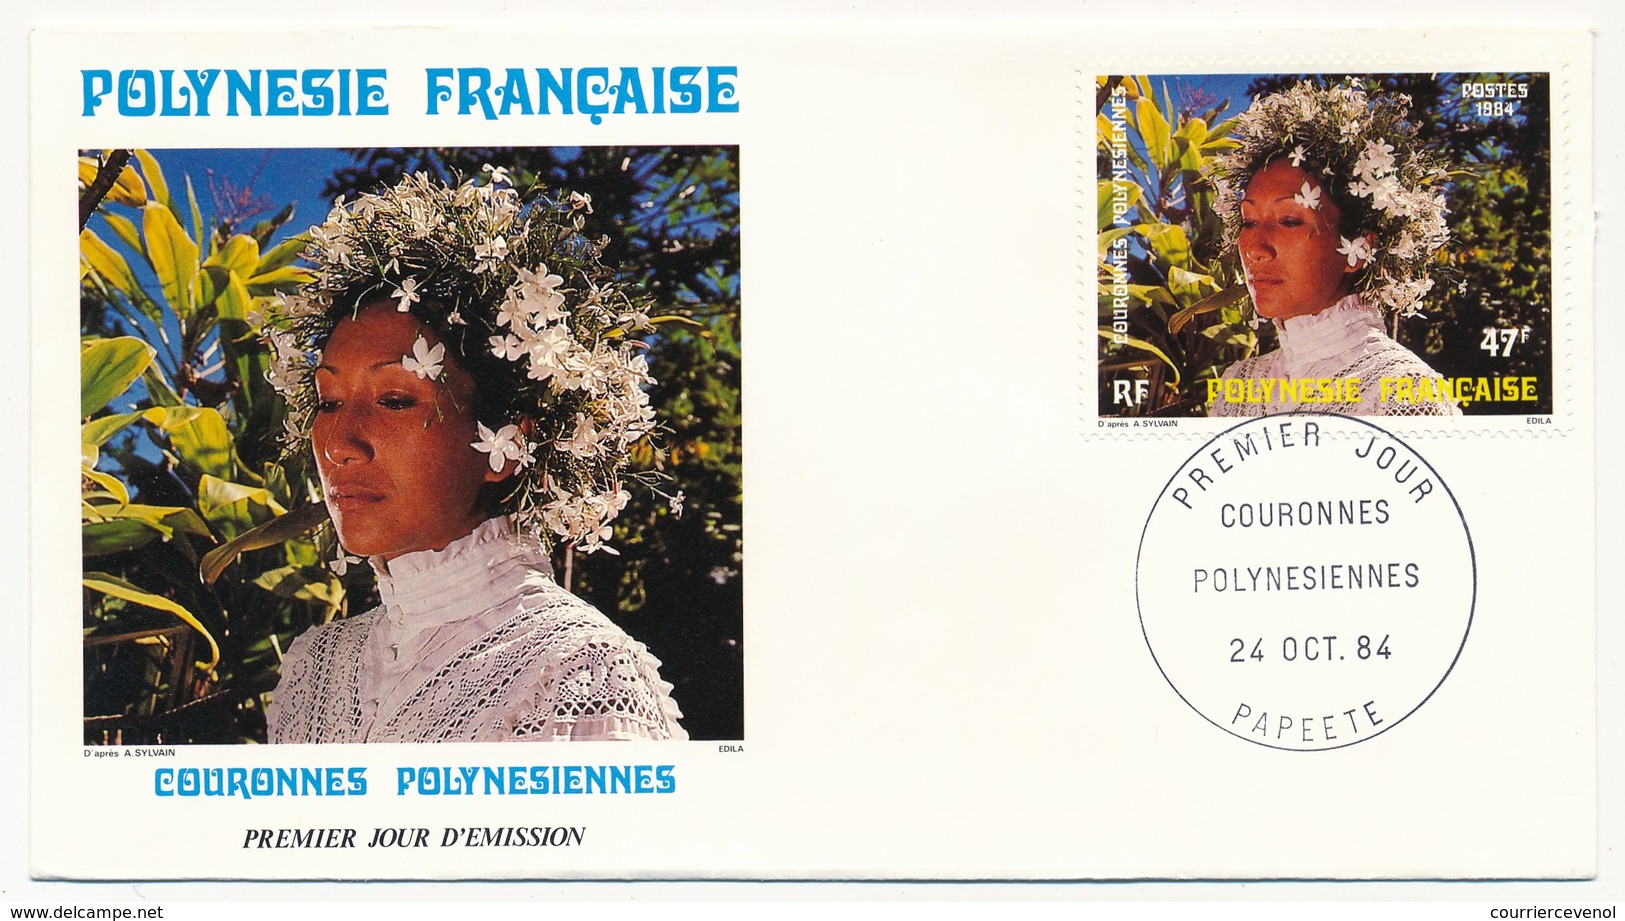 POLYNESIE FRANCAISE - 3 FDC - Couronnes Polynésiennes - 24 Octobre 1984 - Papeete - FDC